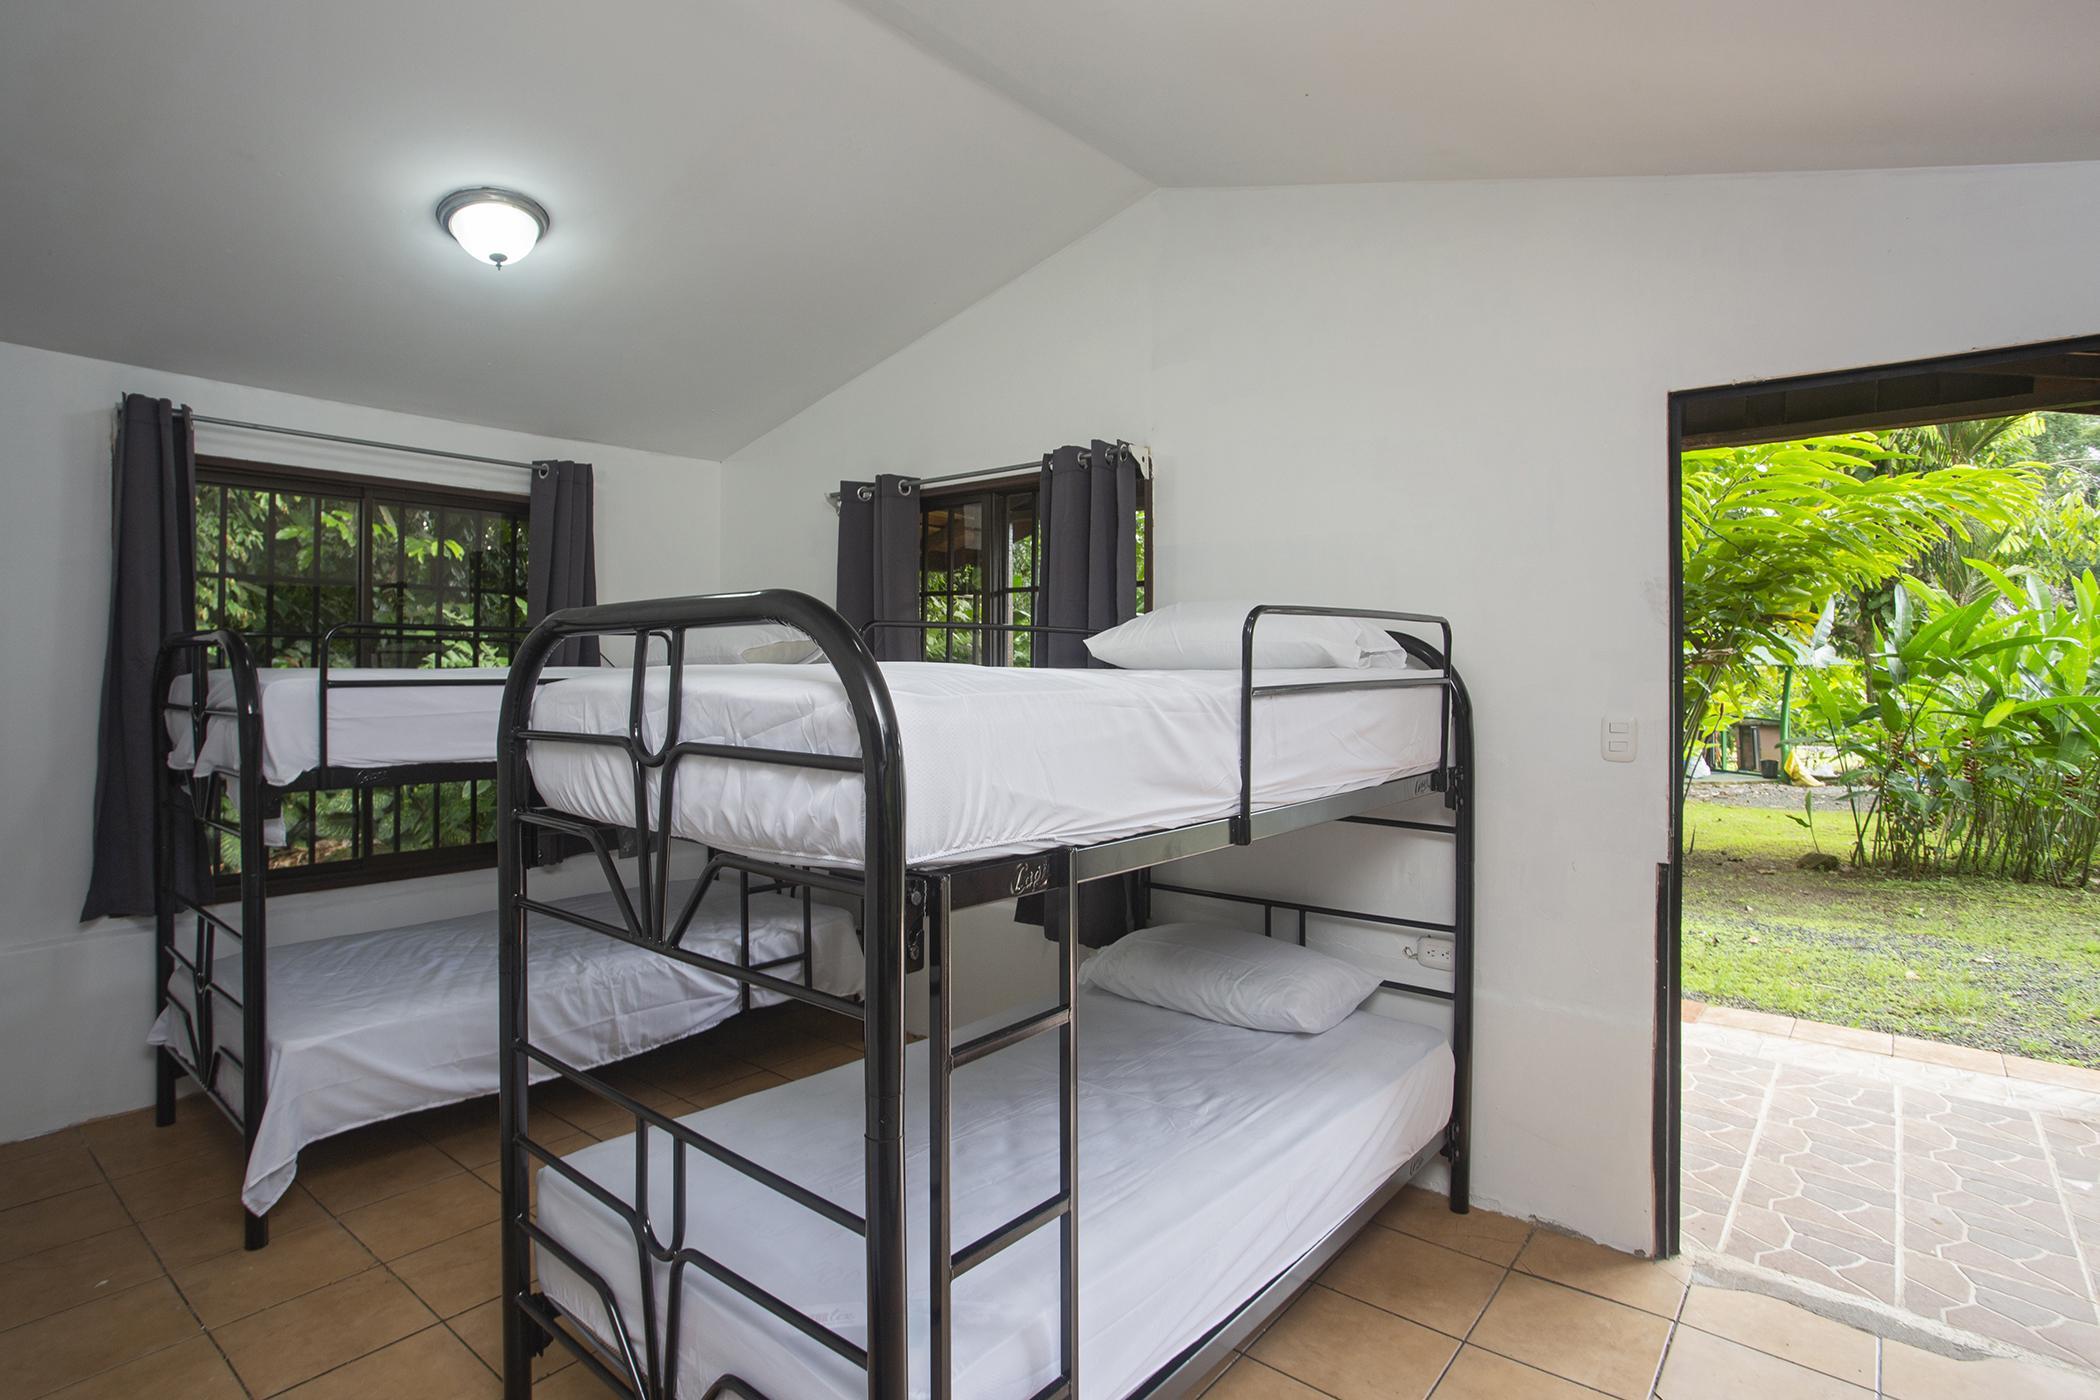 beds in 4 bed community casita